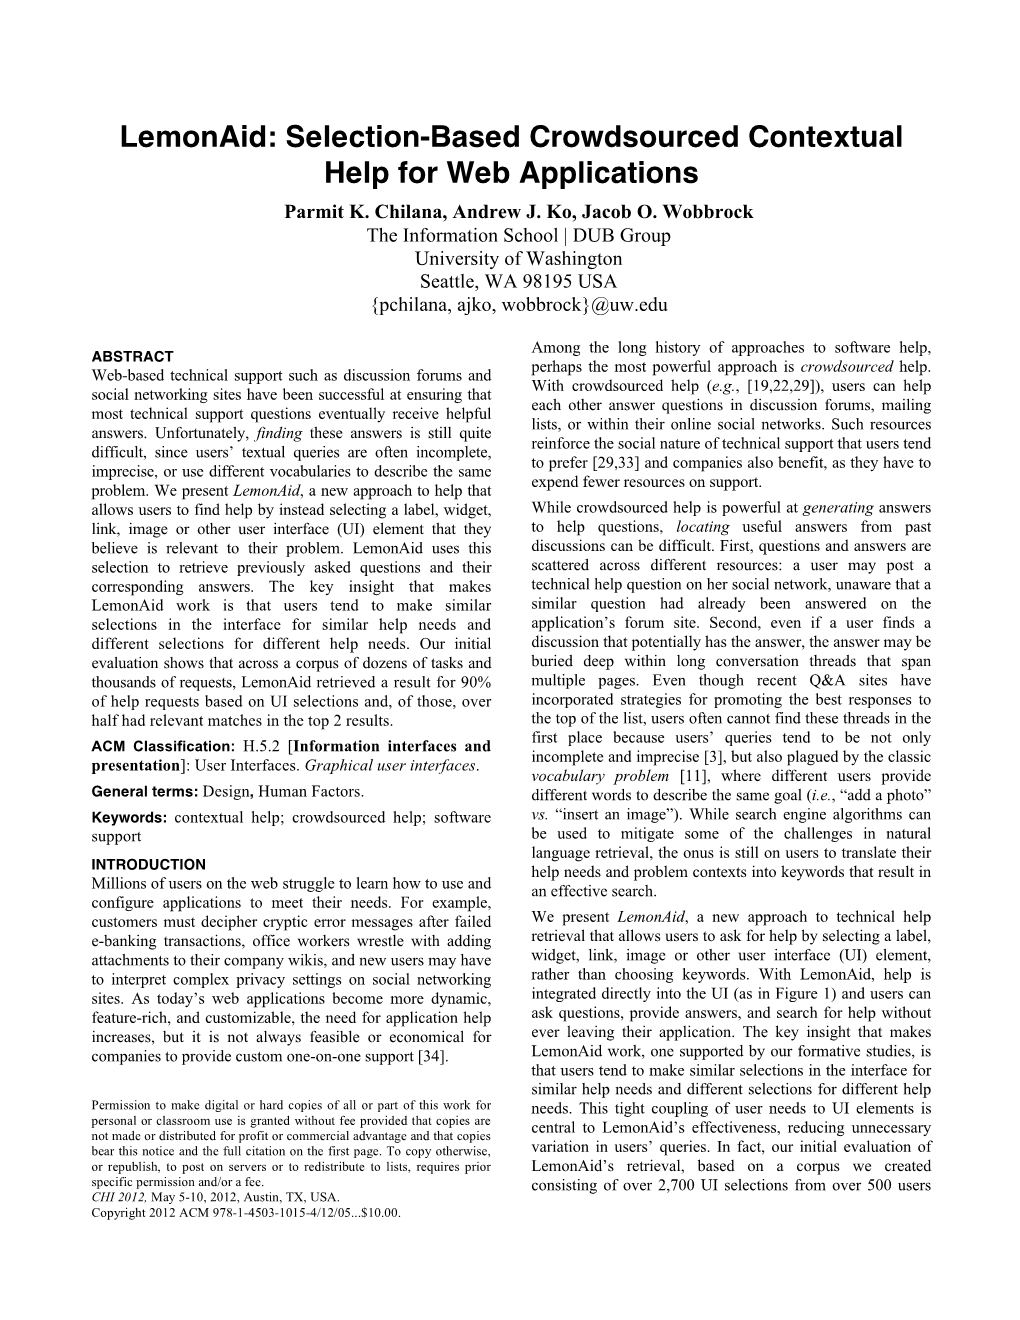 Lemonaid: Selection-Based Crowdsourced Contextual Help for Web Applications Parmit K